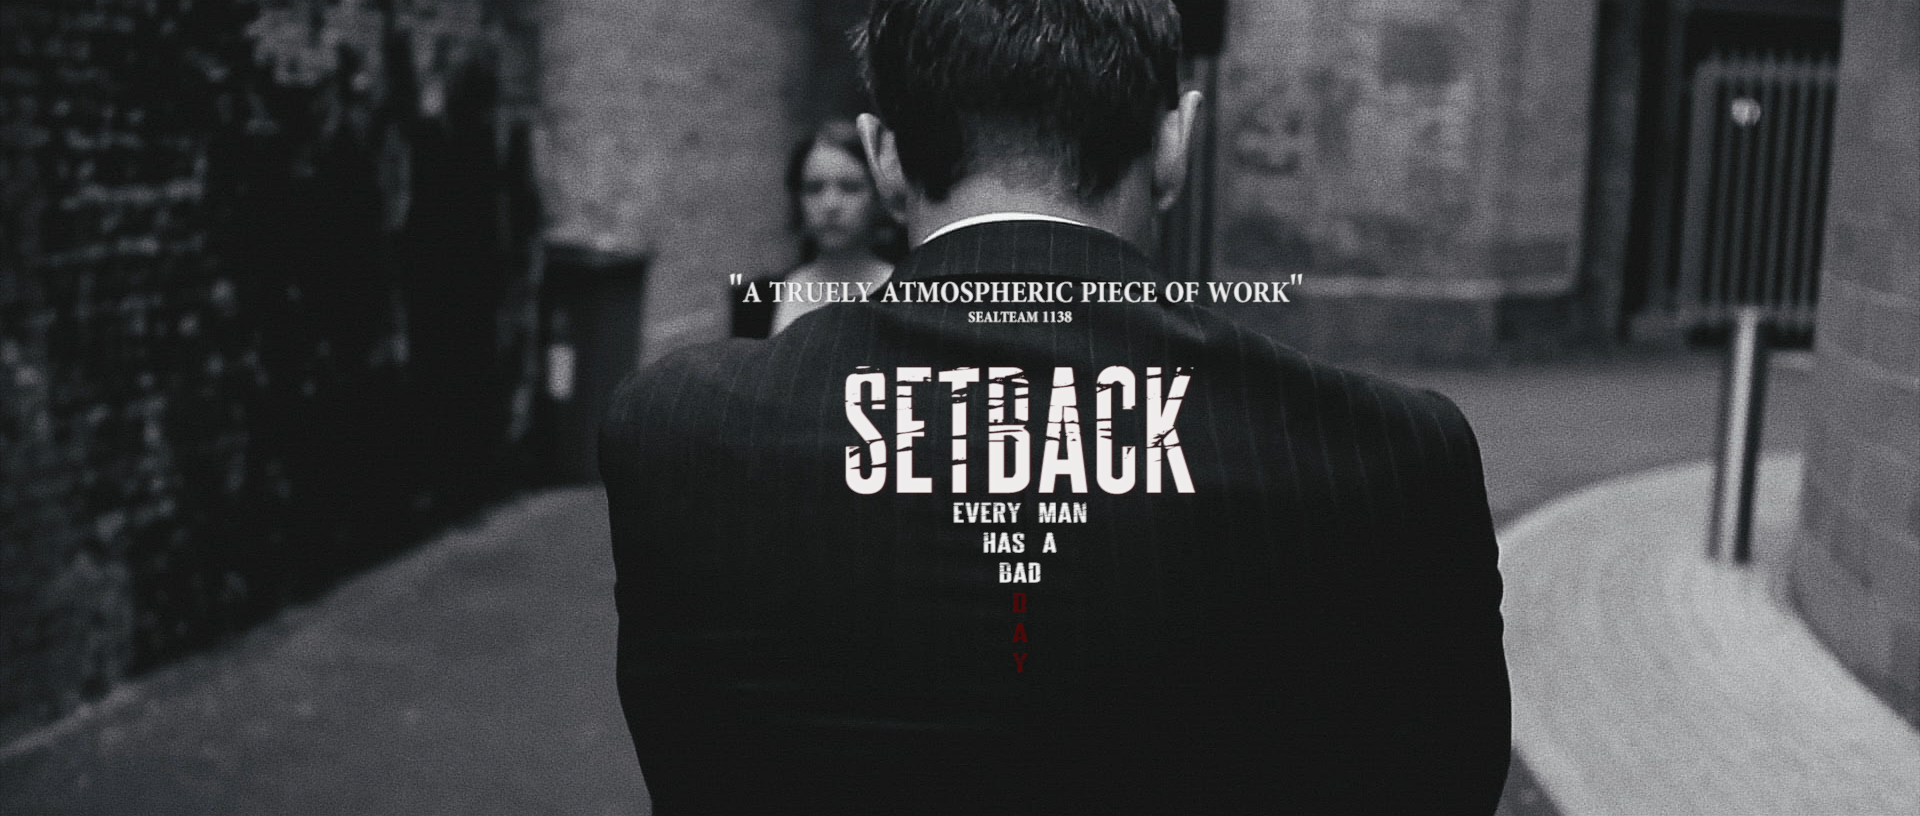 Setback Film by Bulent Ozdemir